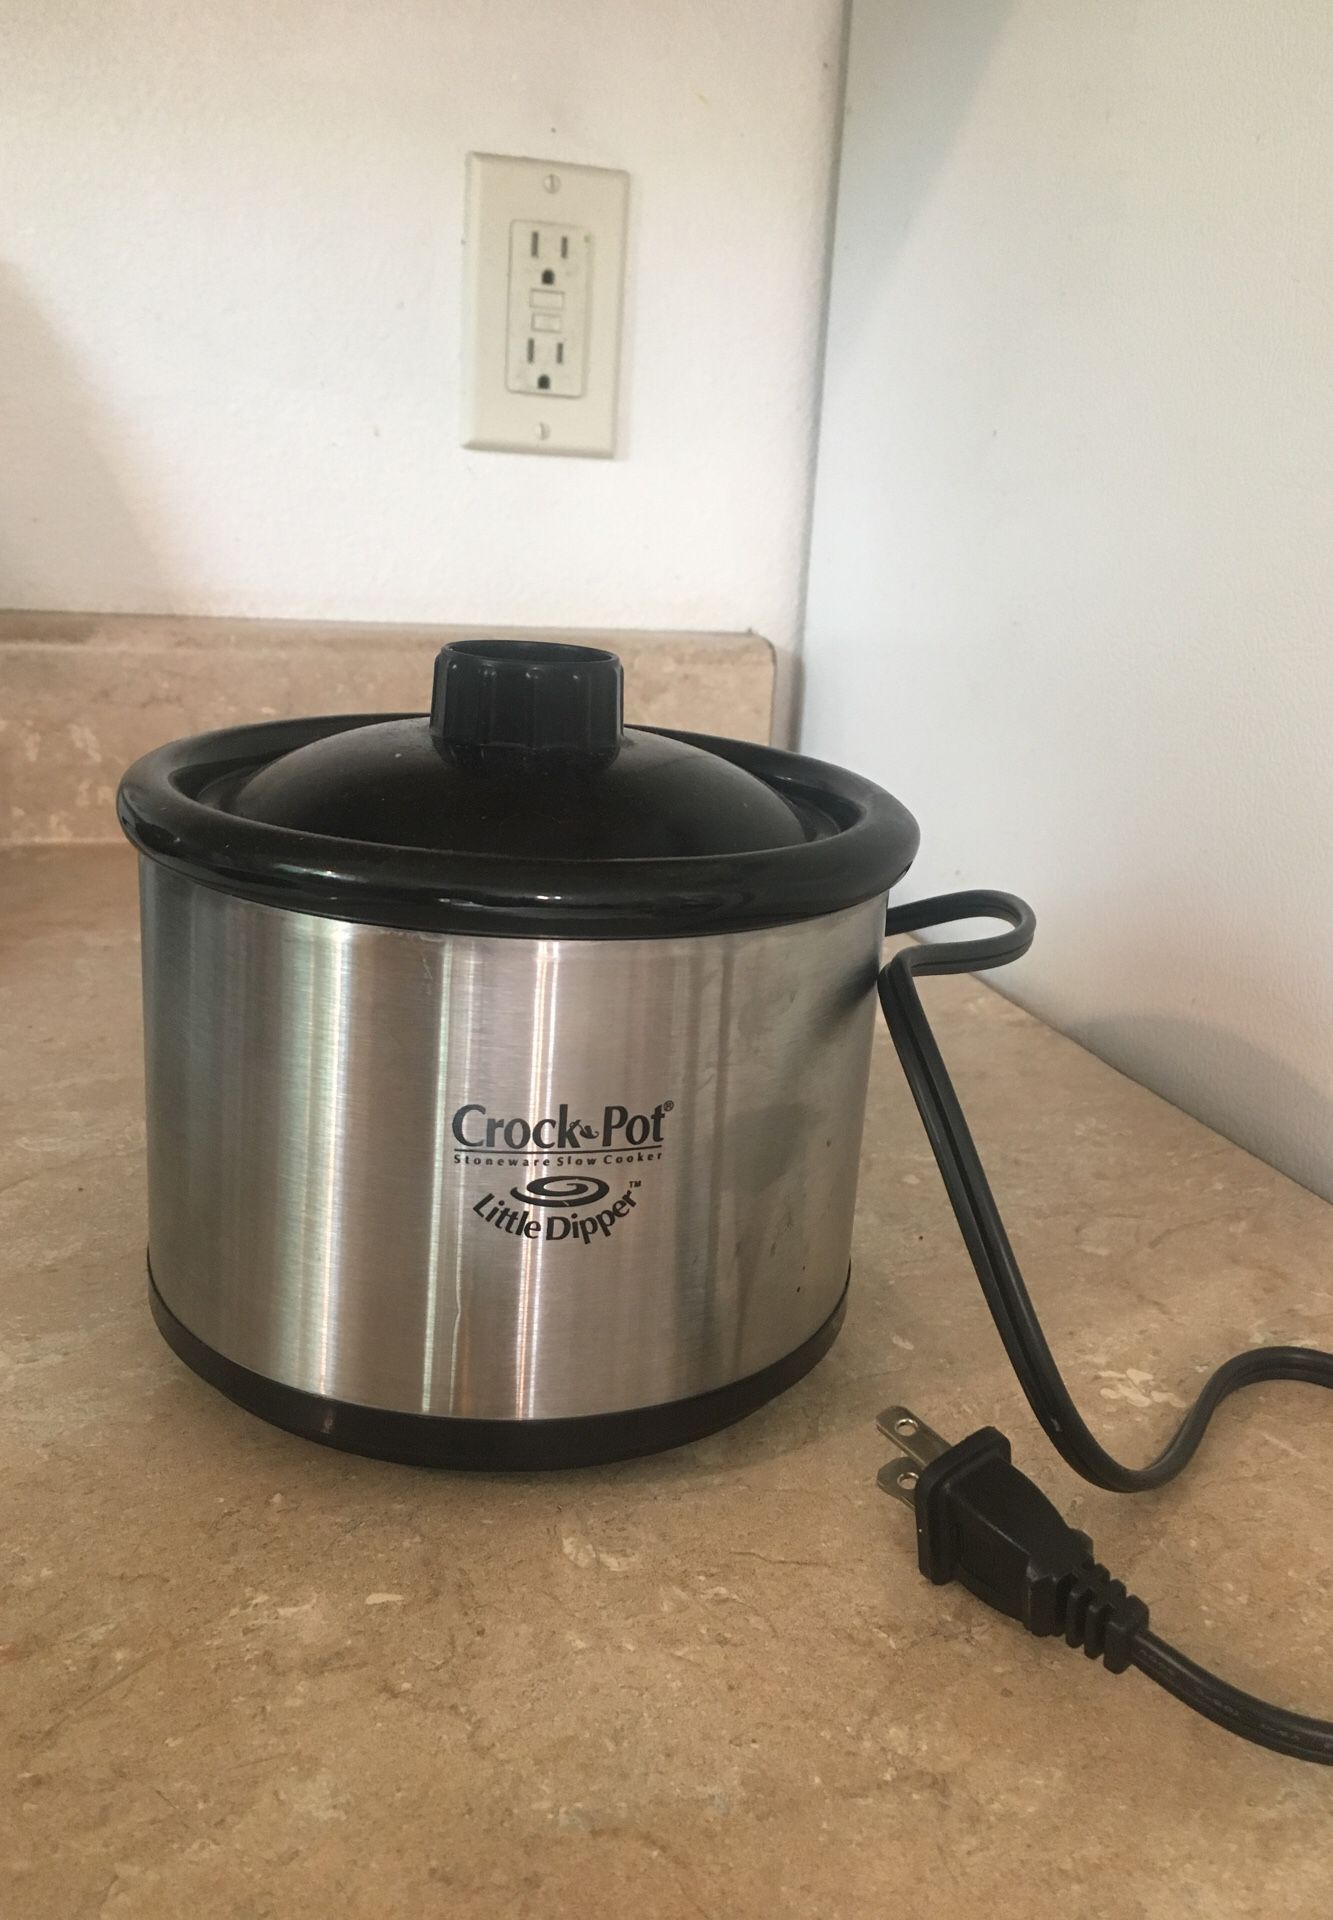 Crock pot slow cooker